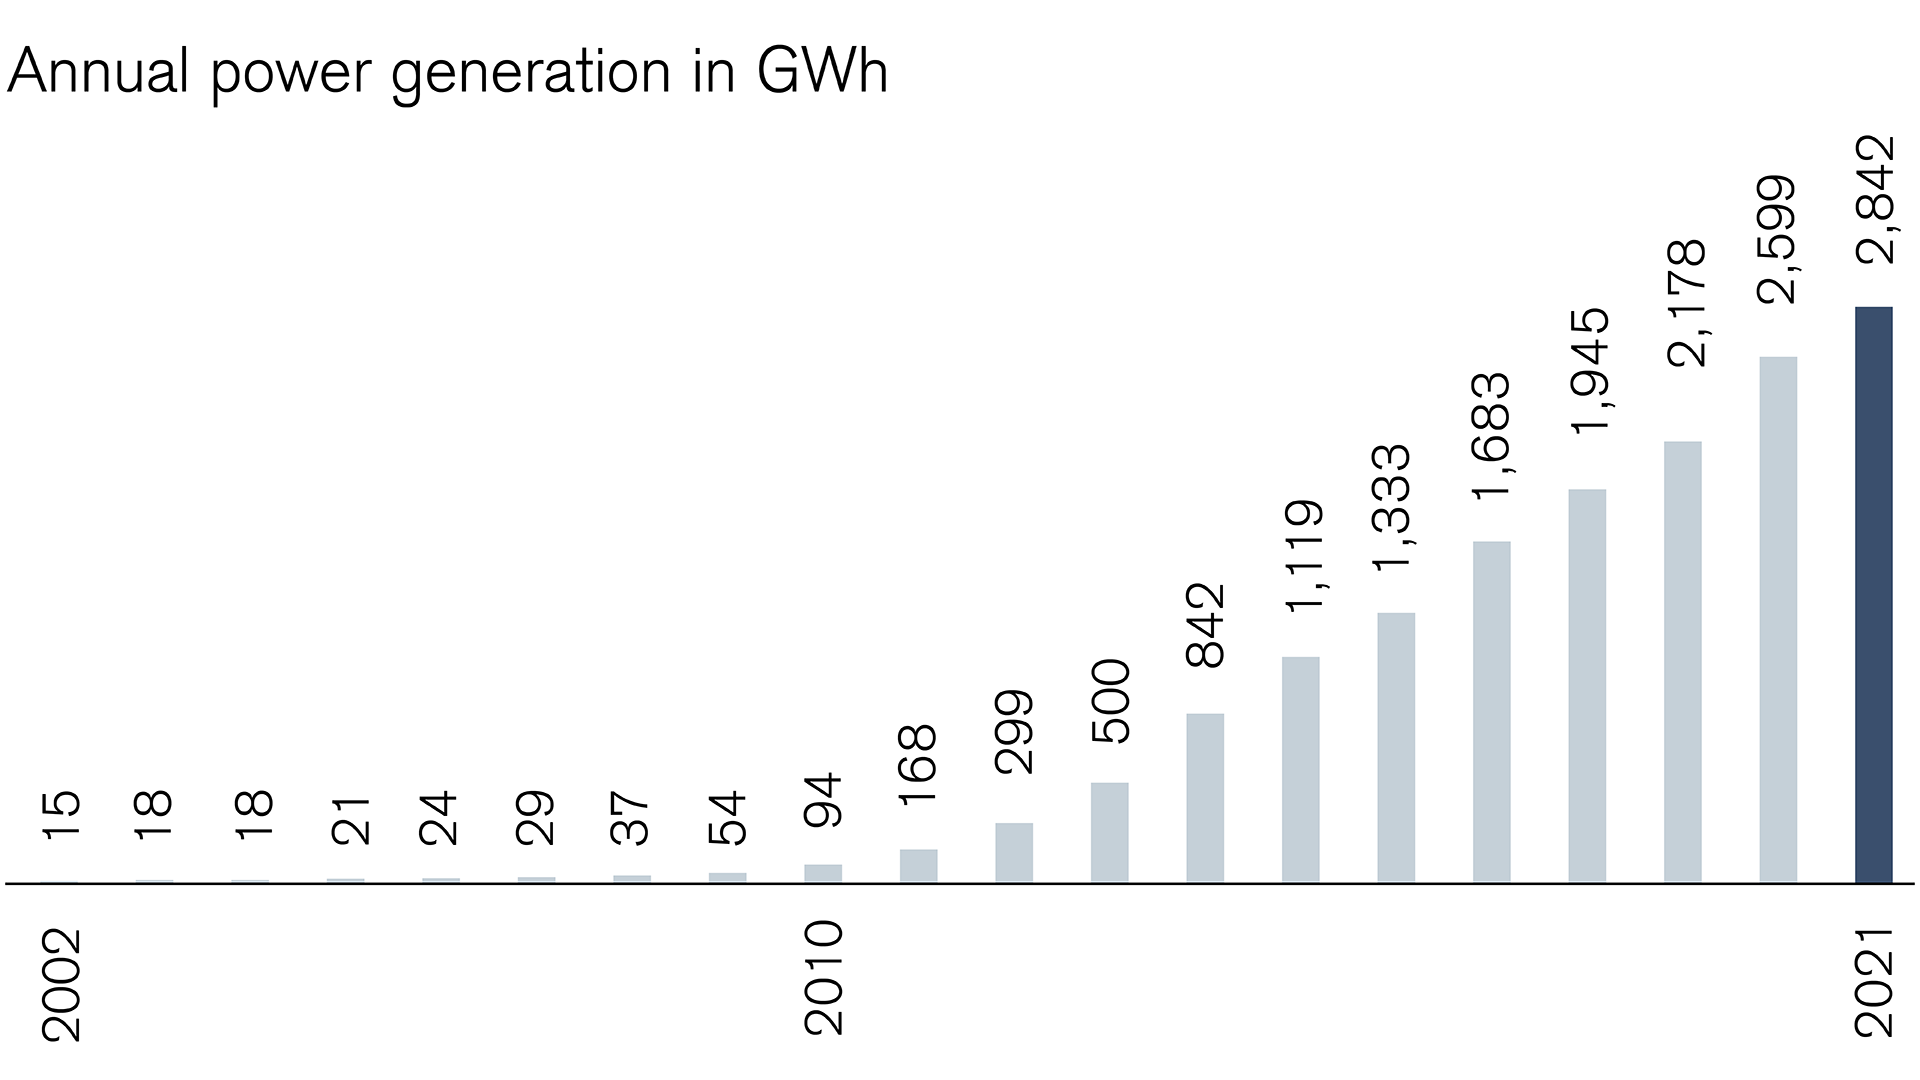 Solar power: Annual energy yield in GWh is increasing